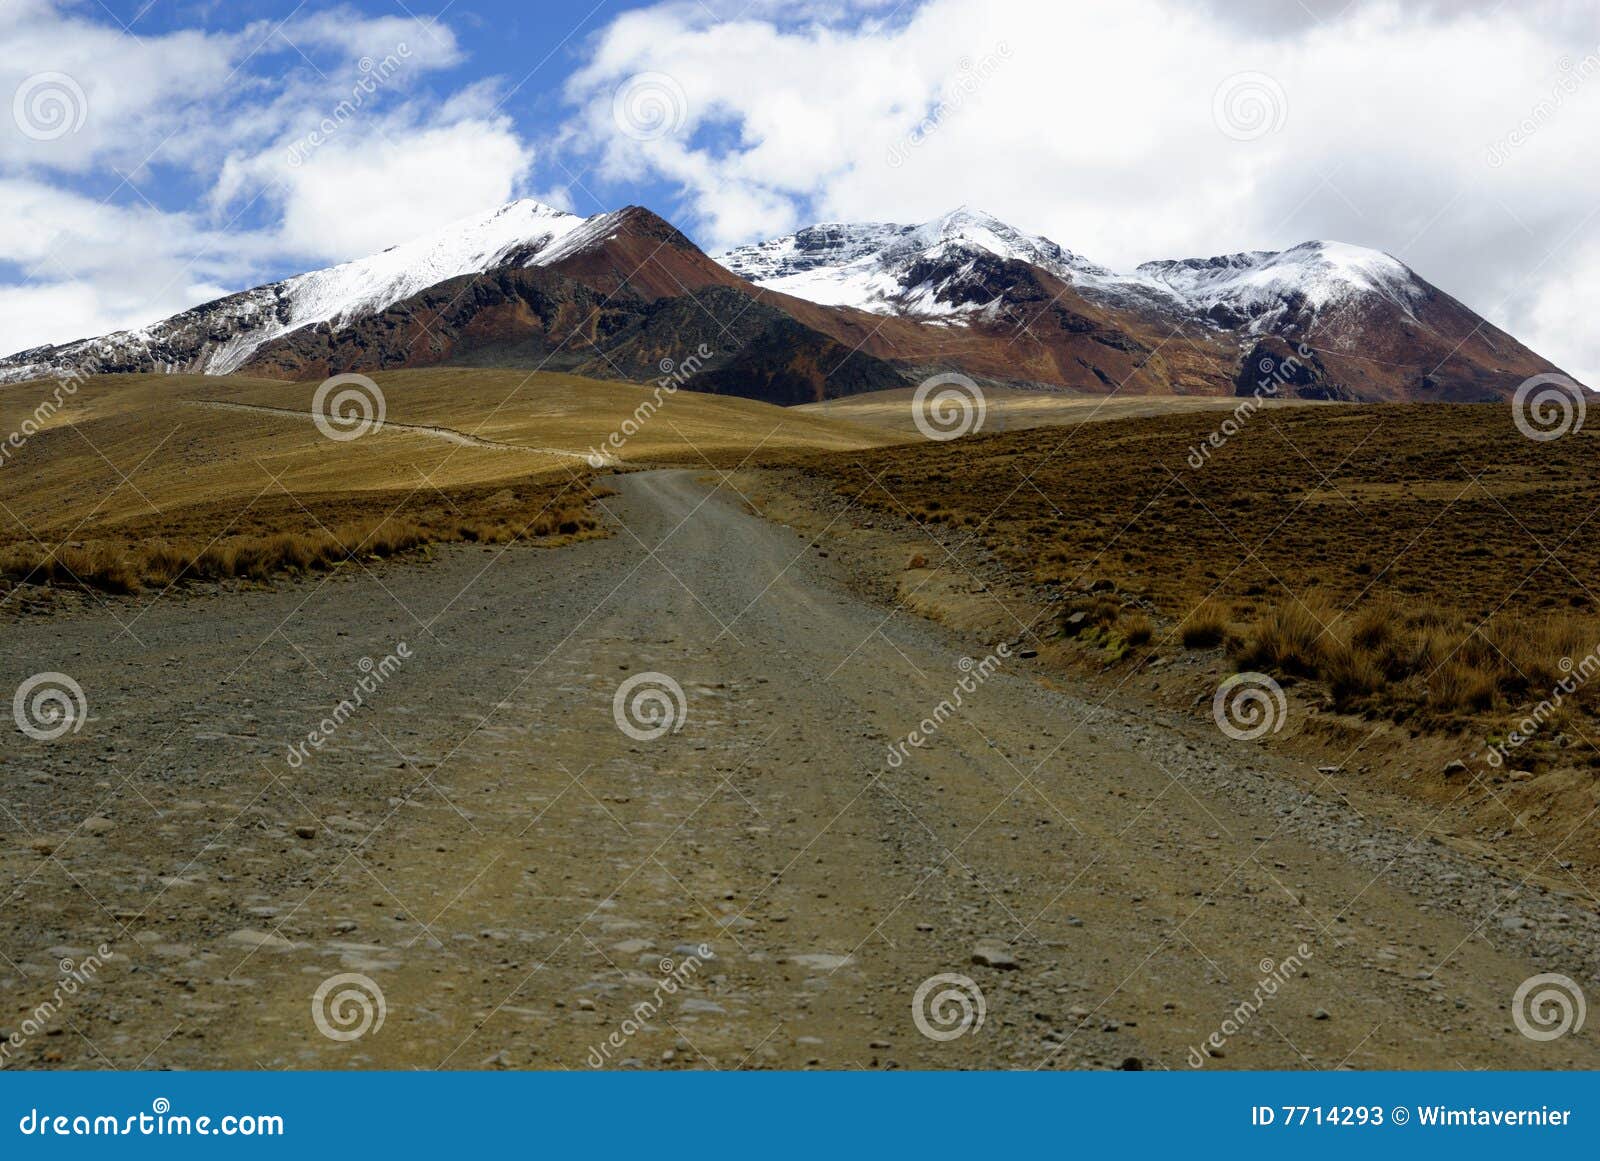 the road to chacaltaya, la paz, bolivia